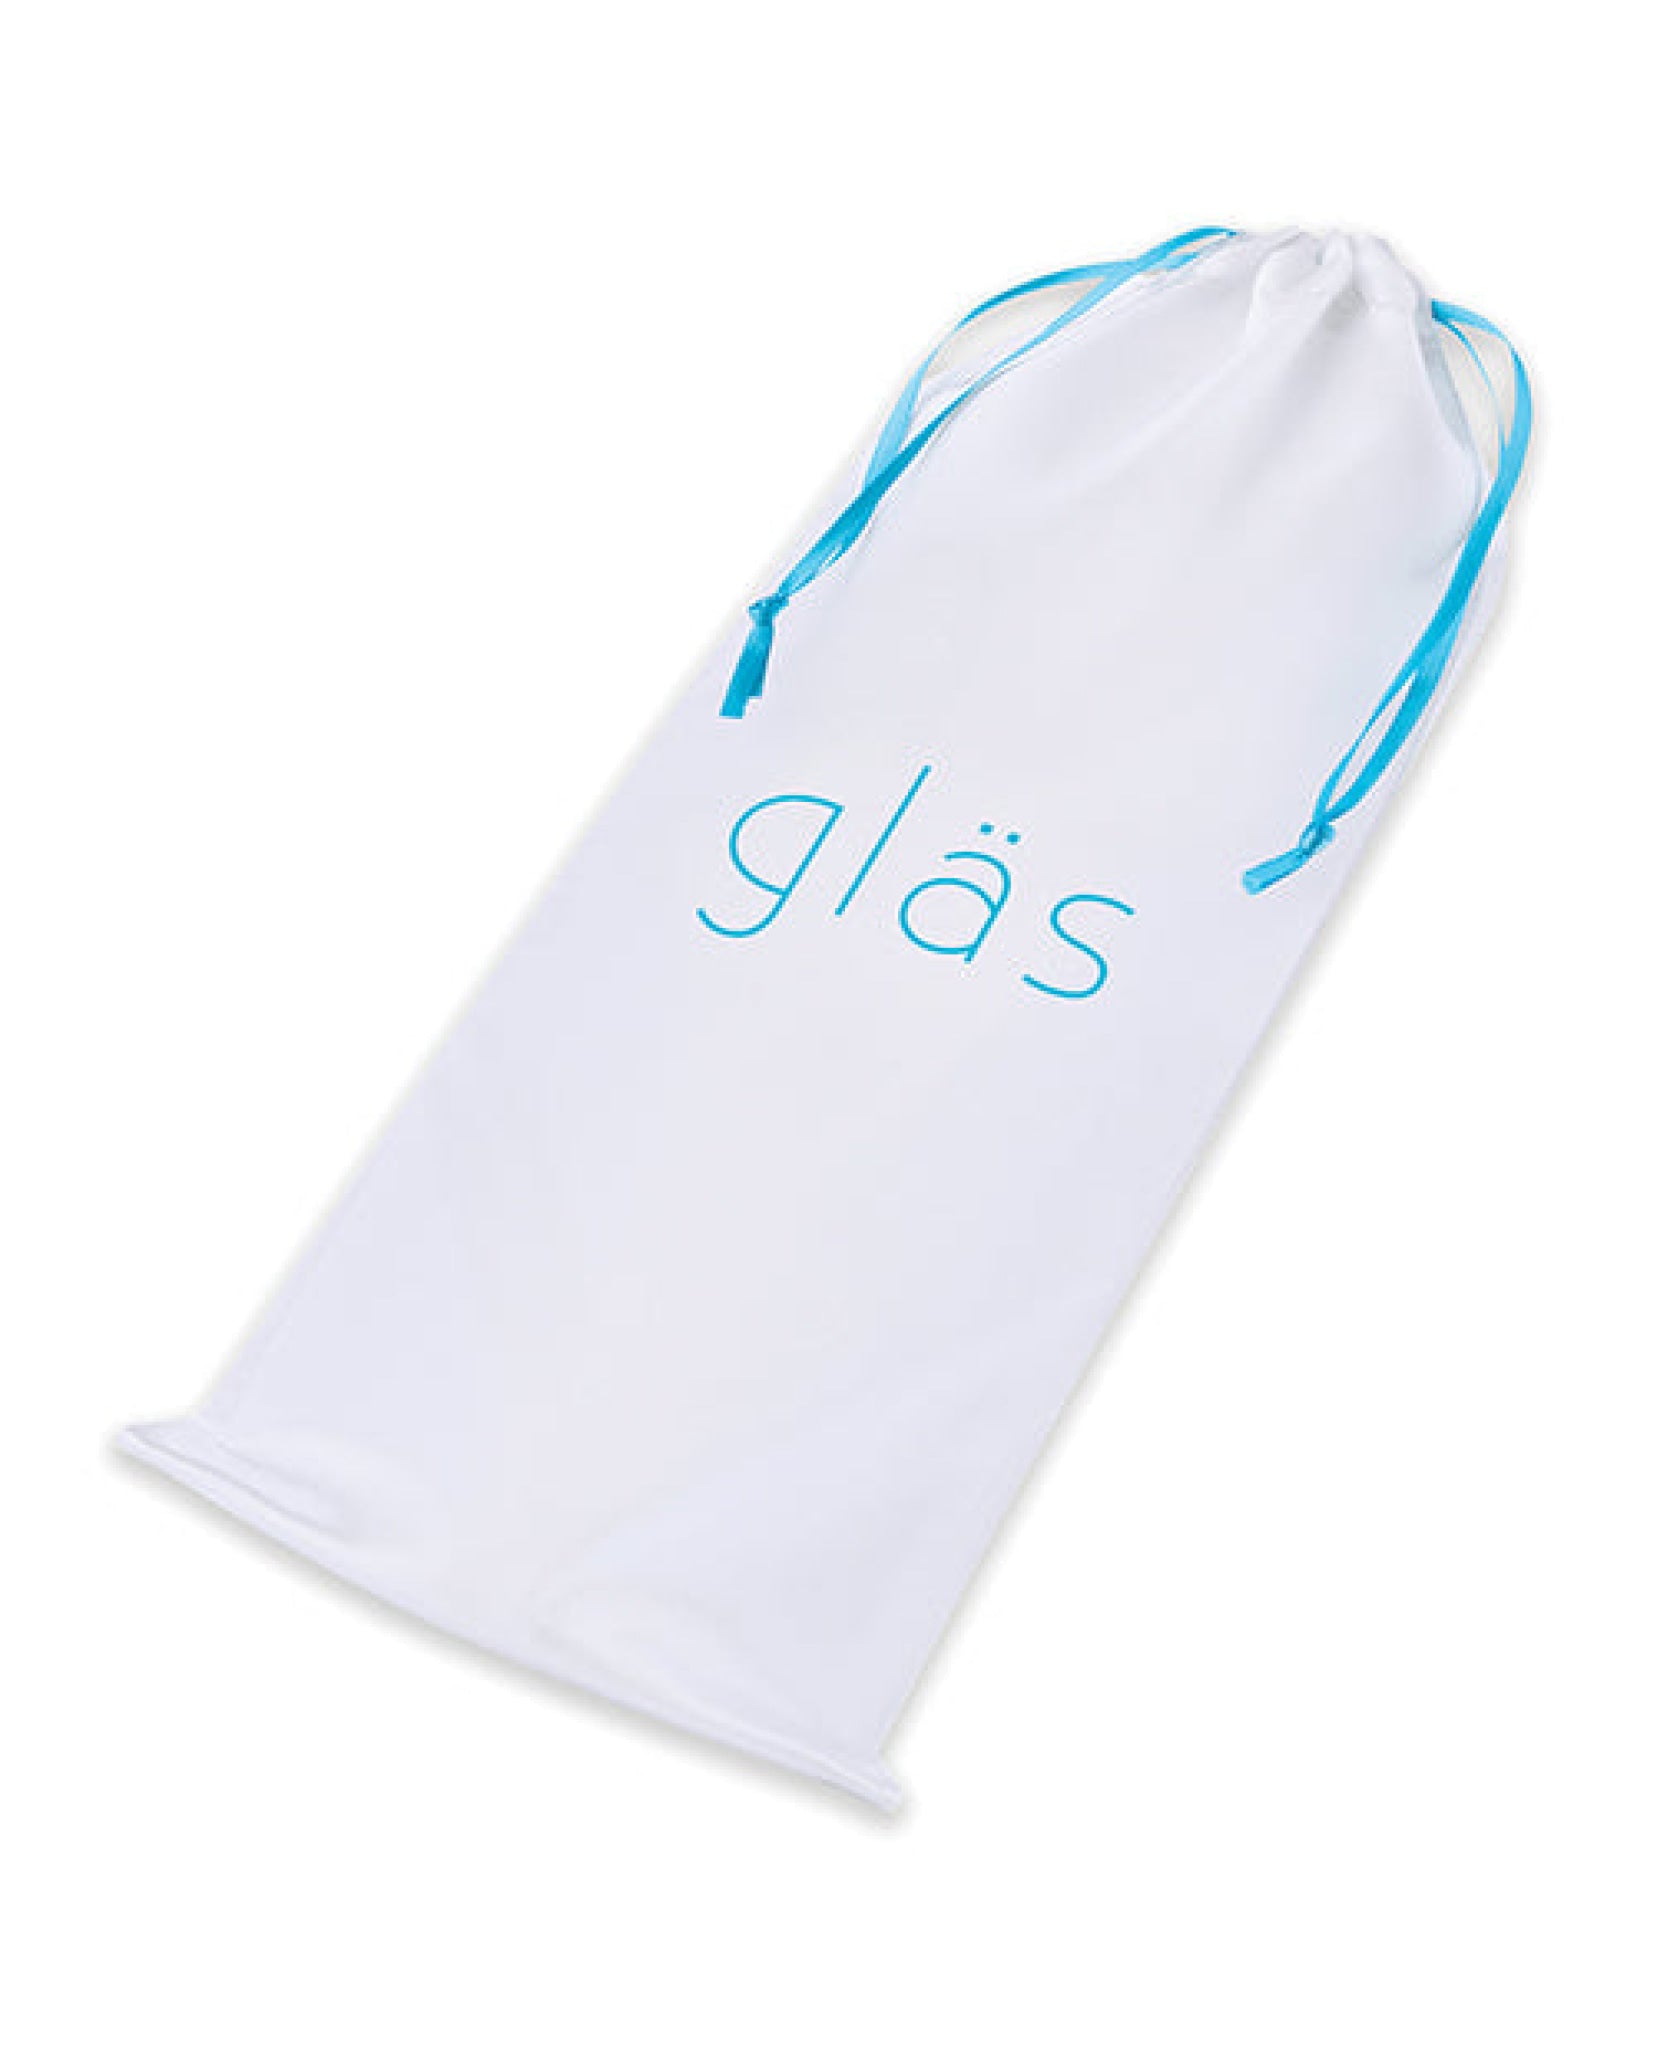 Glas 8" Sweetheart Glass Dildo - Pink-clear Gläs